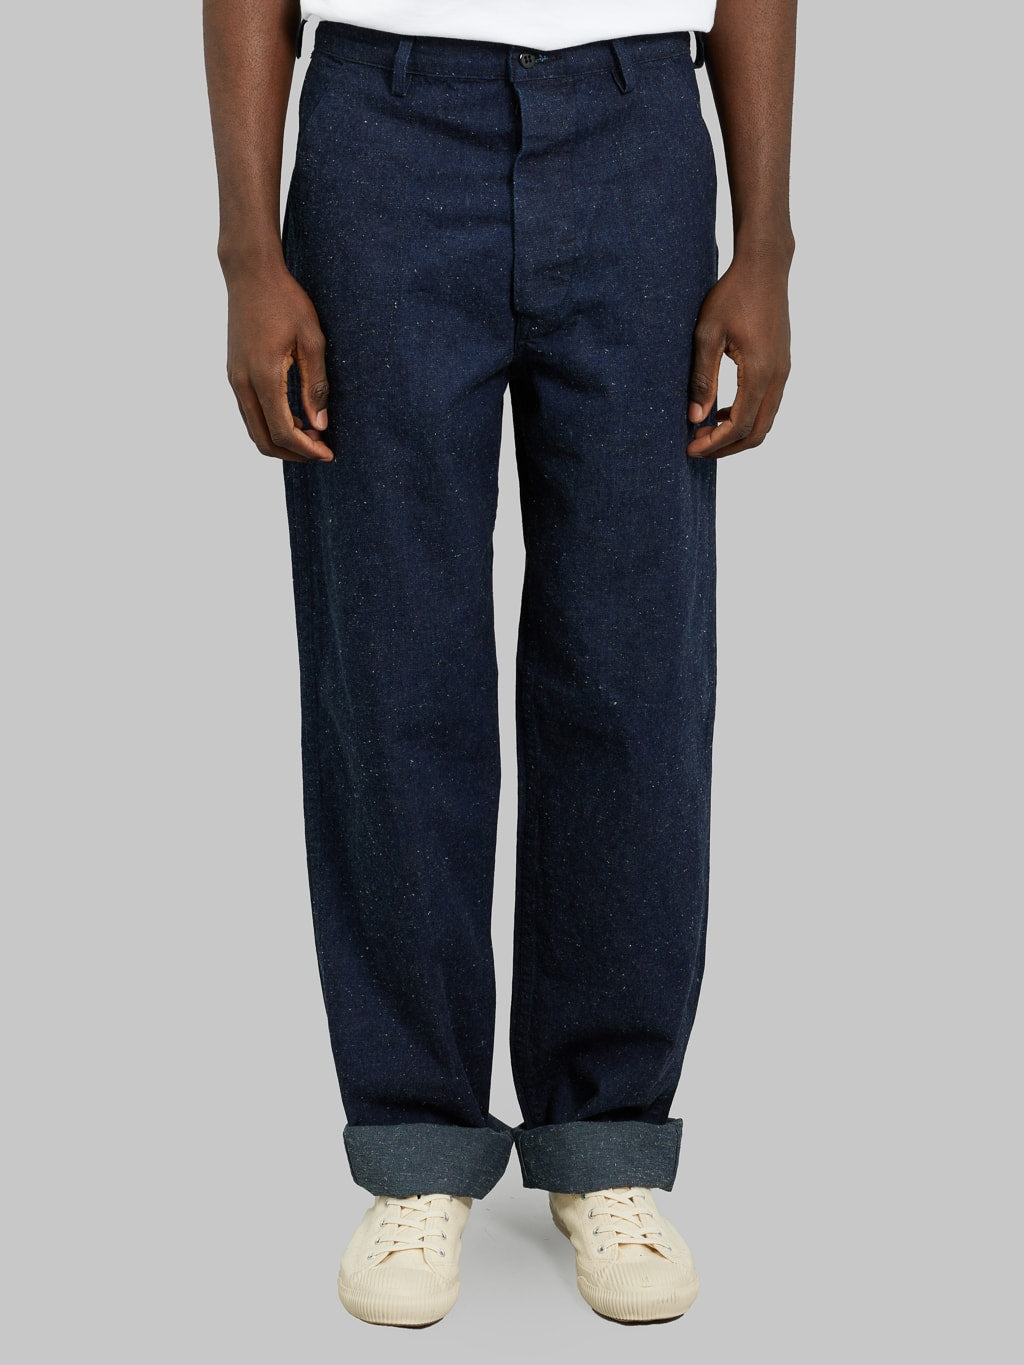 tcb jeans usn seamens denim trousers front straight fit